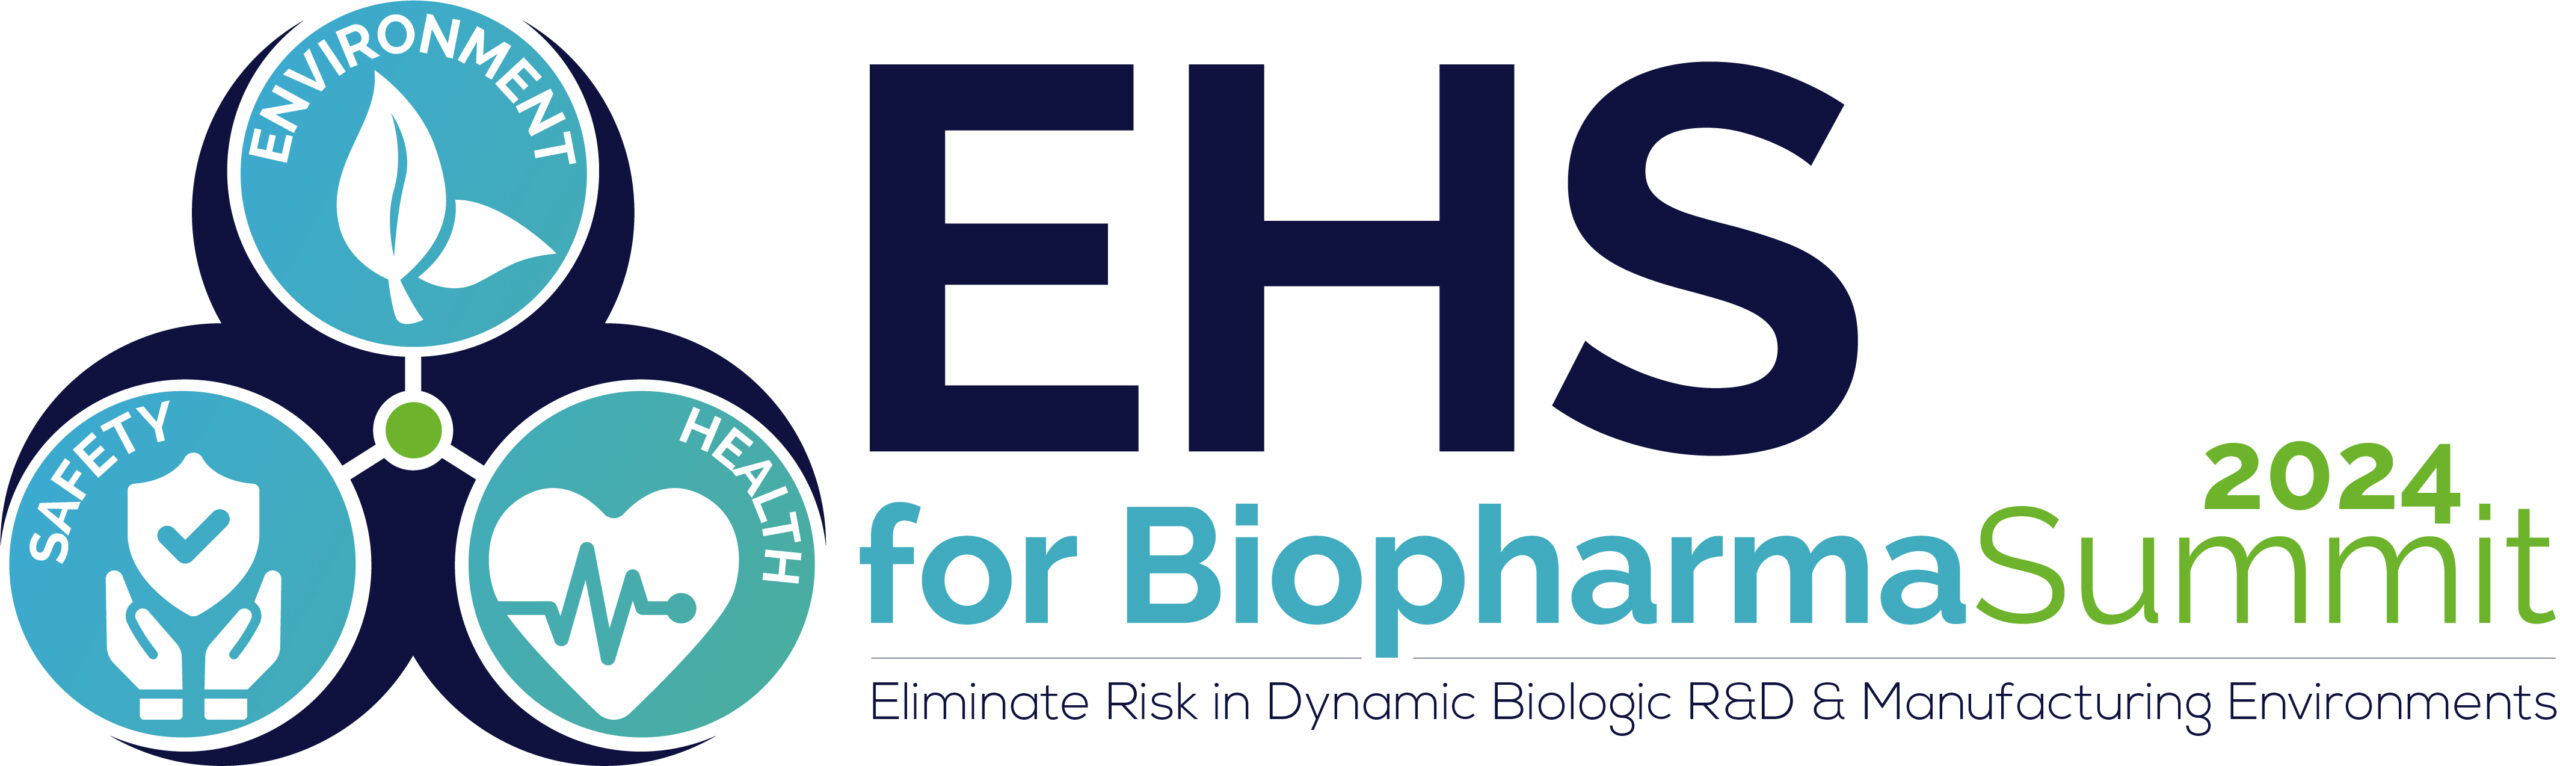 HW230825 49618 - EHS for Biopharma logo FINAL